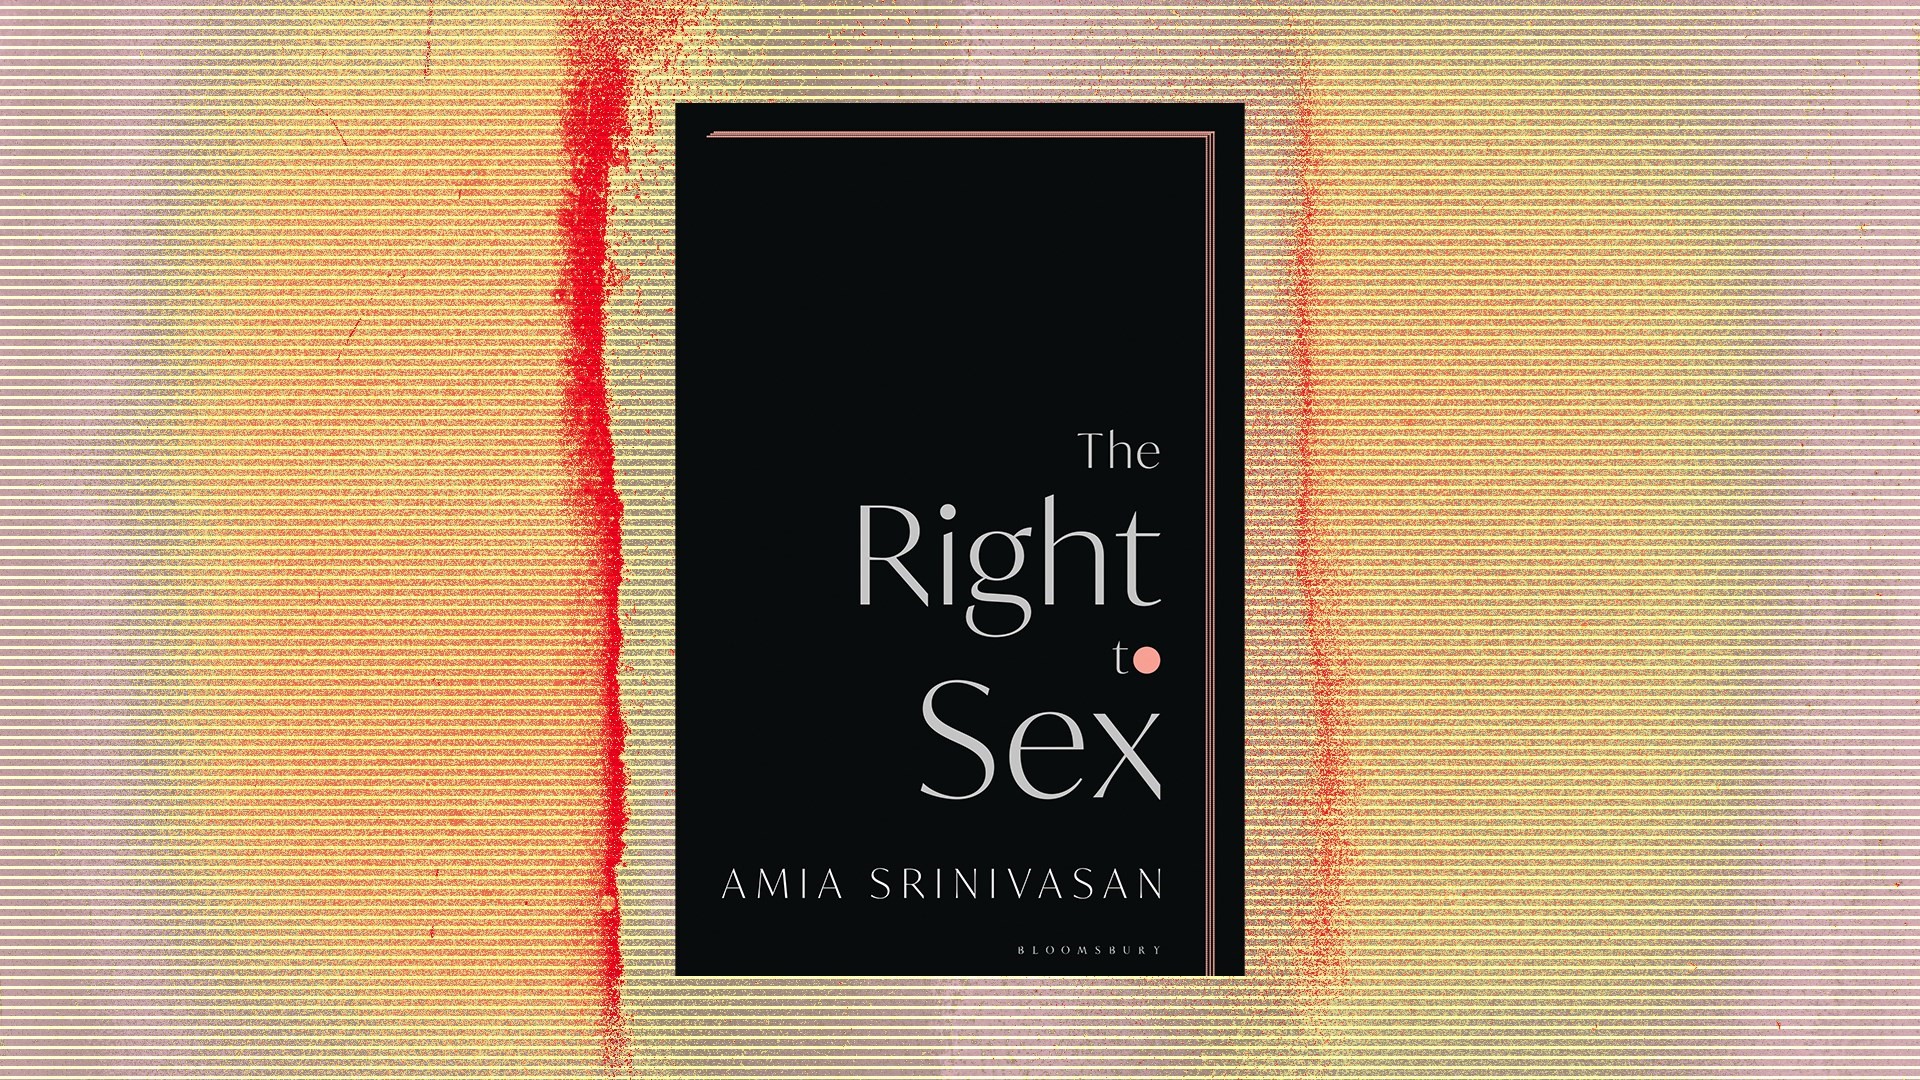 1920 Sex Com - Amia Srinivasan on why we should dwell on discomfort in feminism | Dazed